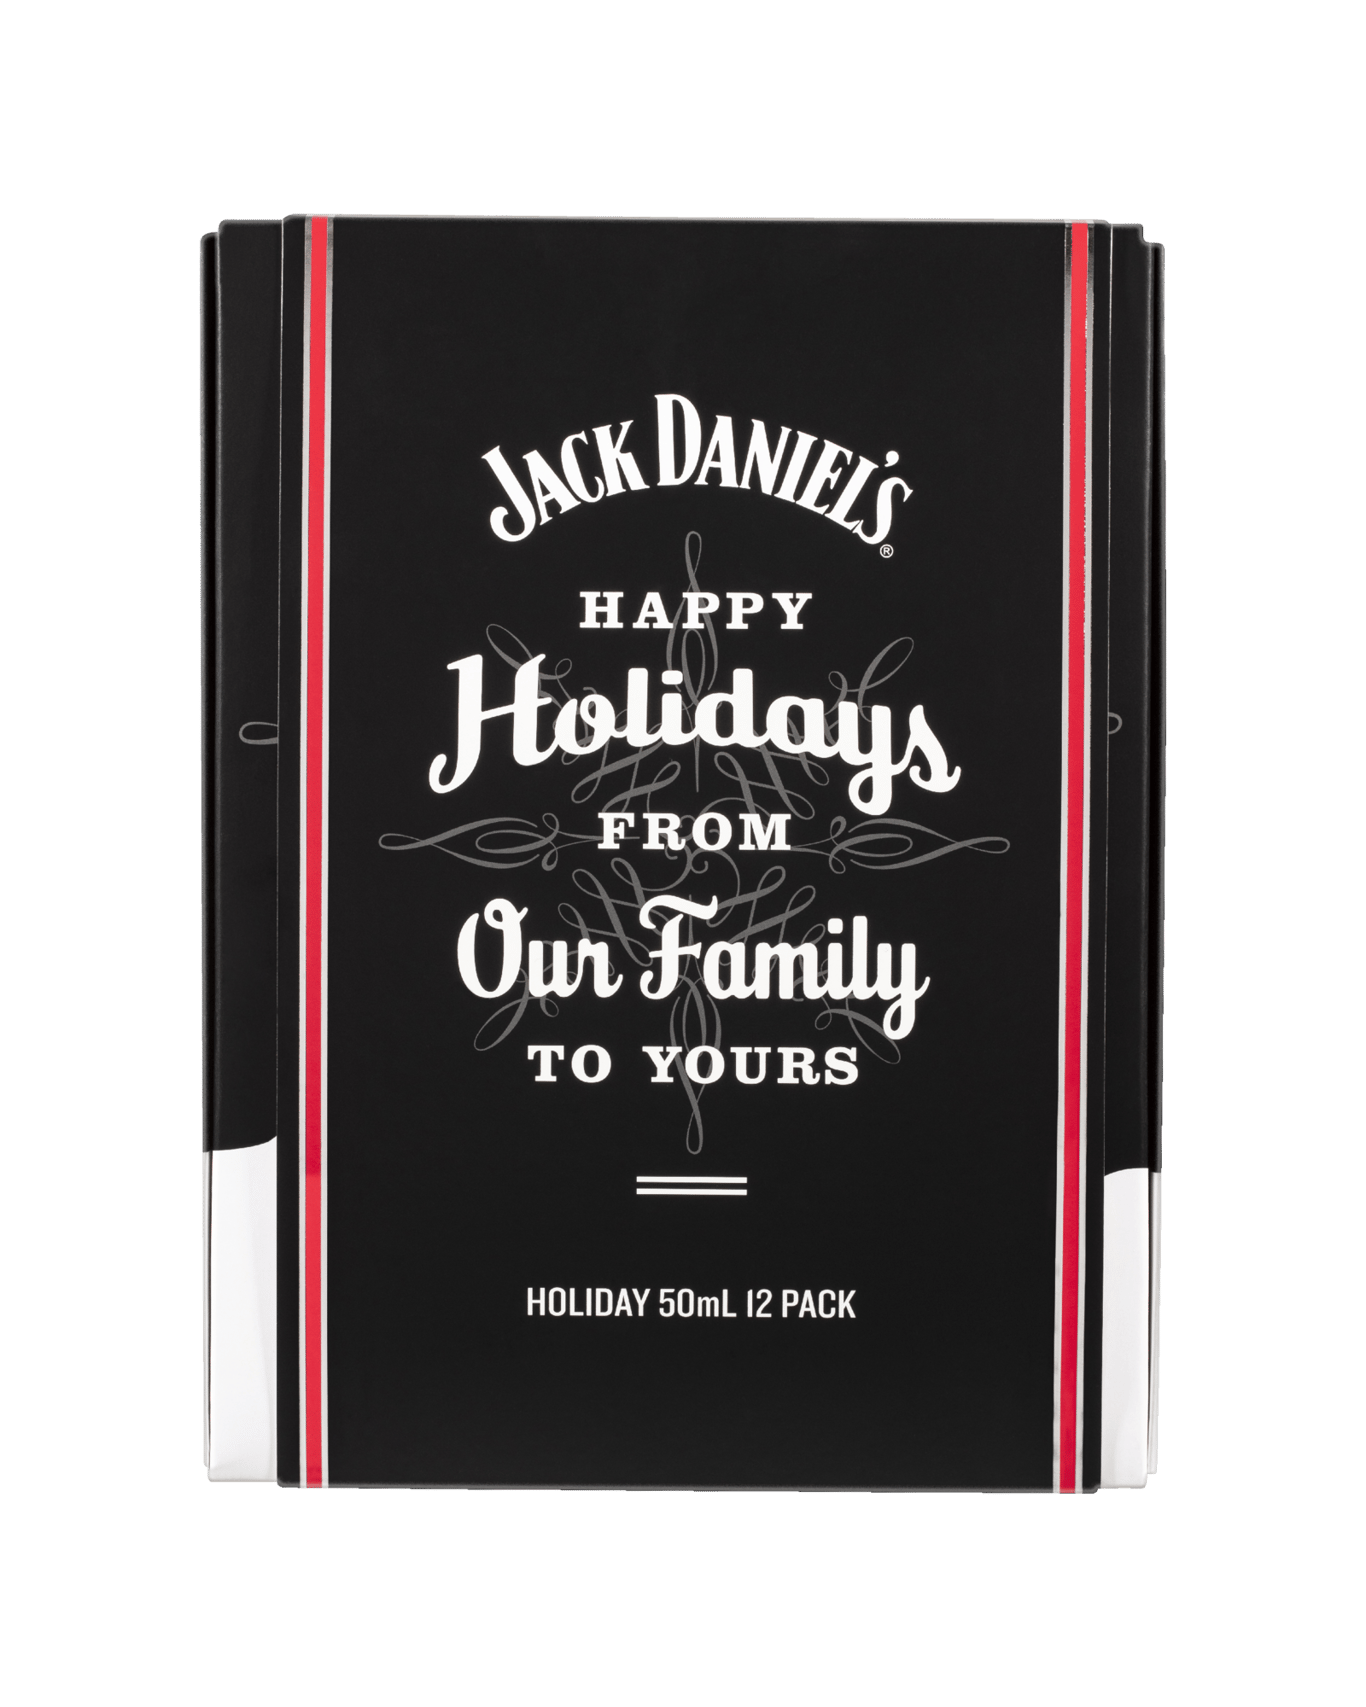 Buy Jack Daniel s Jack Daniel s 12 Day Calendar Online (Lowest Price